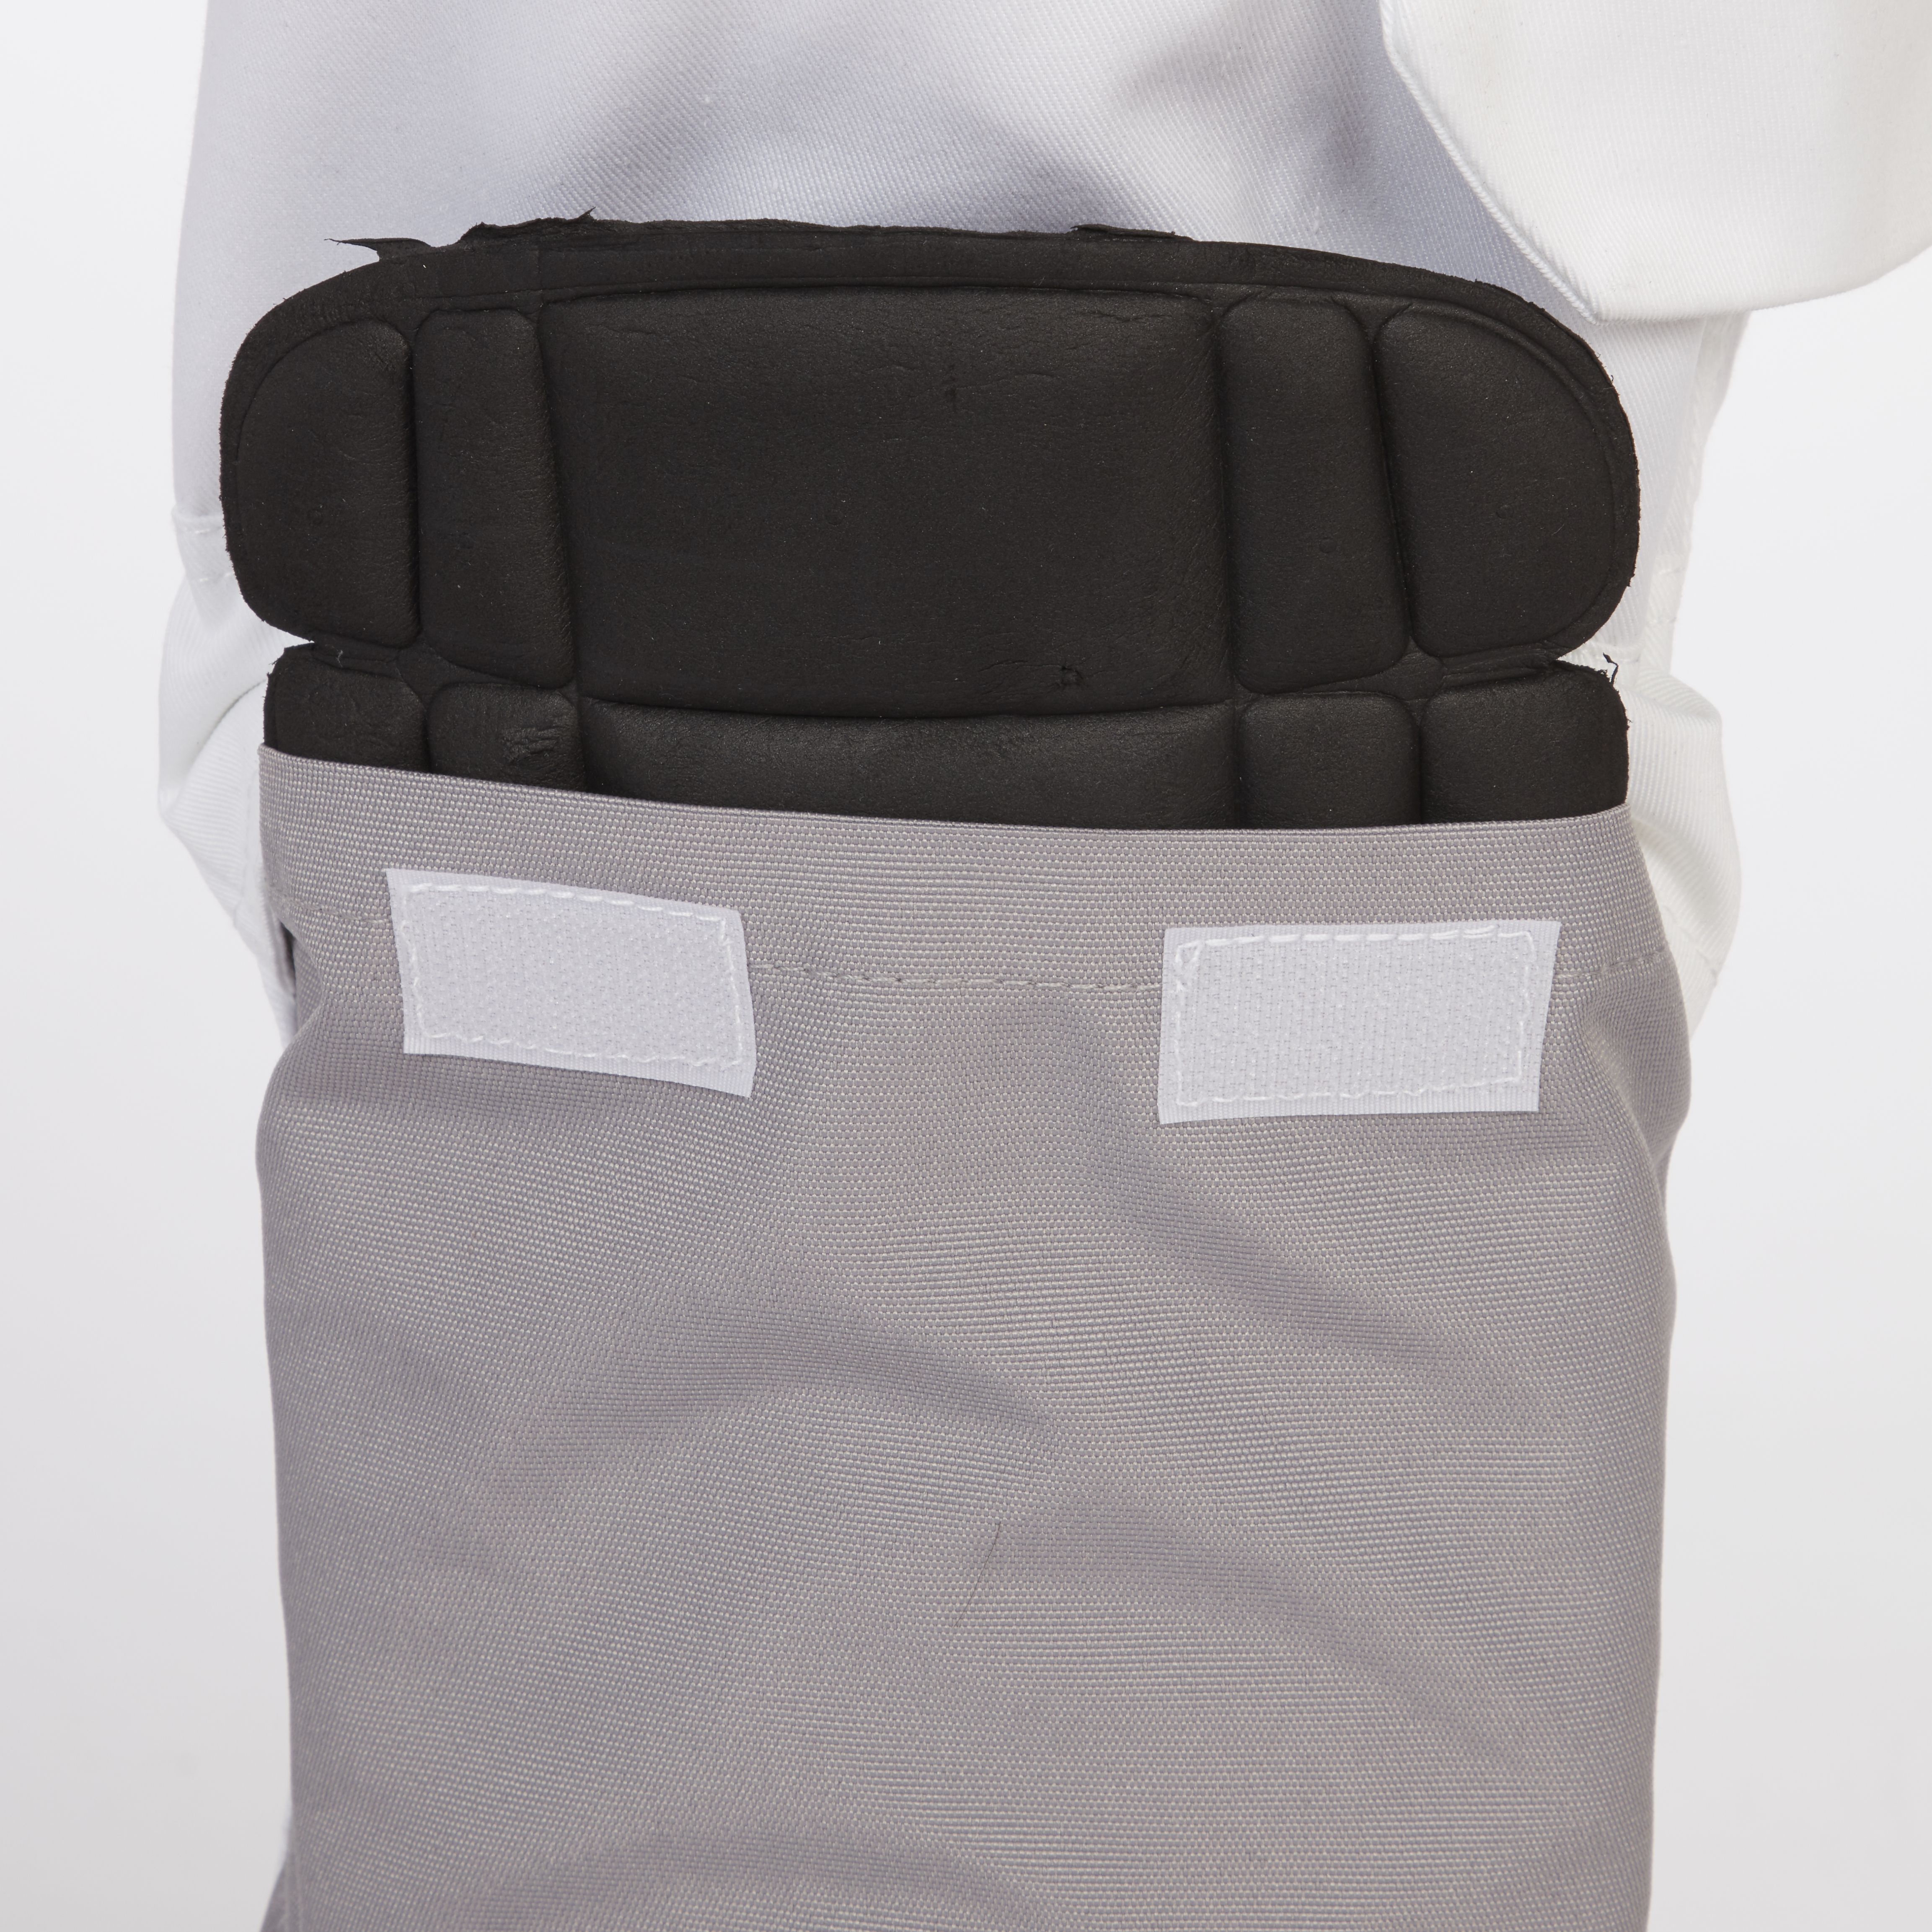 Site Jackal White / Grey Men's Holster pocket trousers, W36" L32"